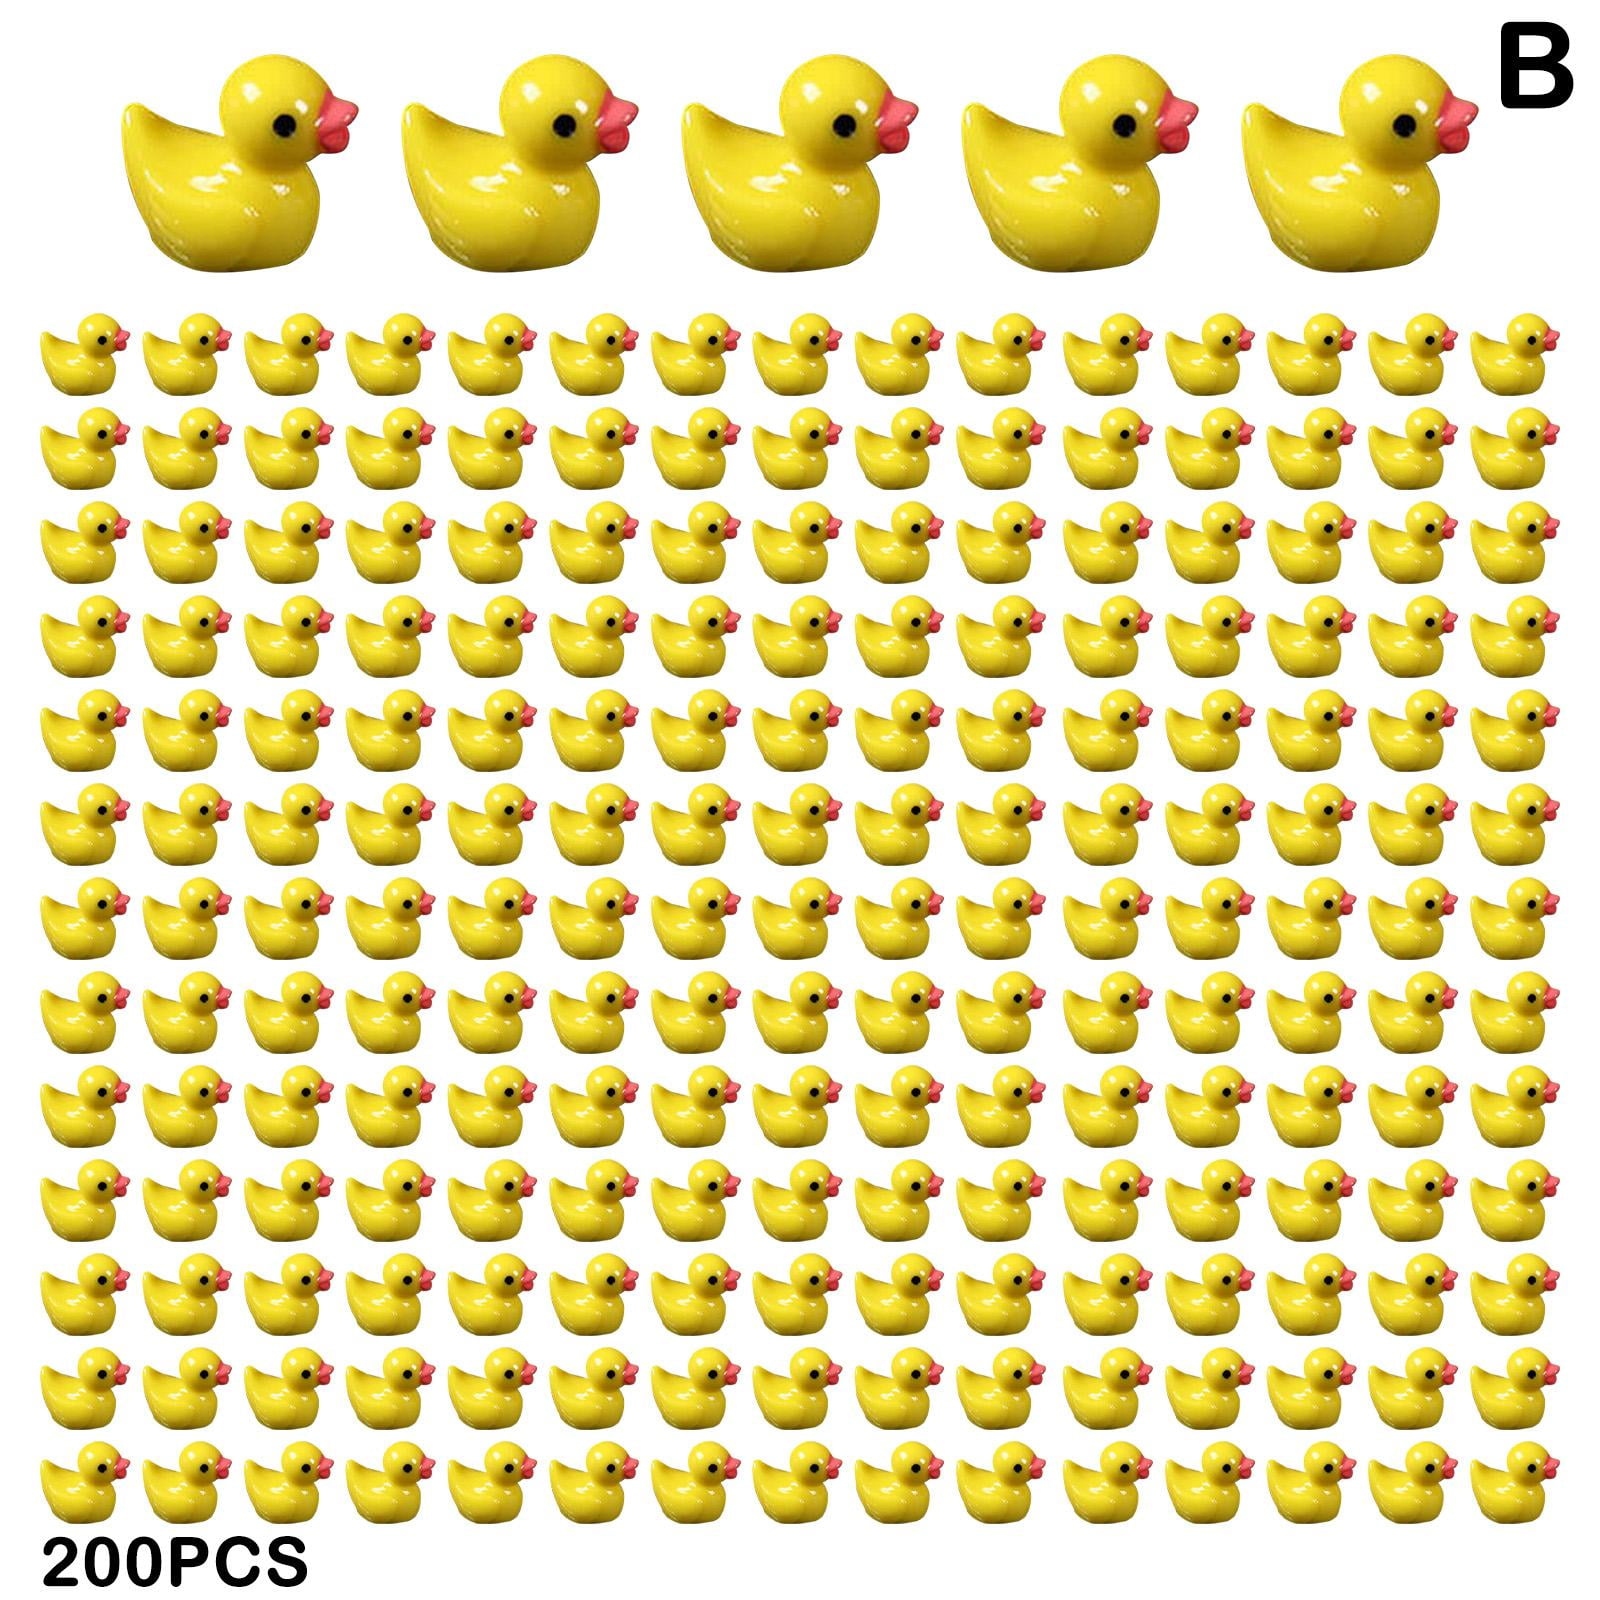 75pcs Mini Resin Ducks Tiny Miniature Ducks Resin Duck Figures